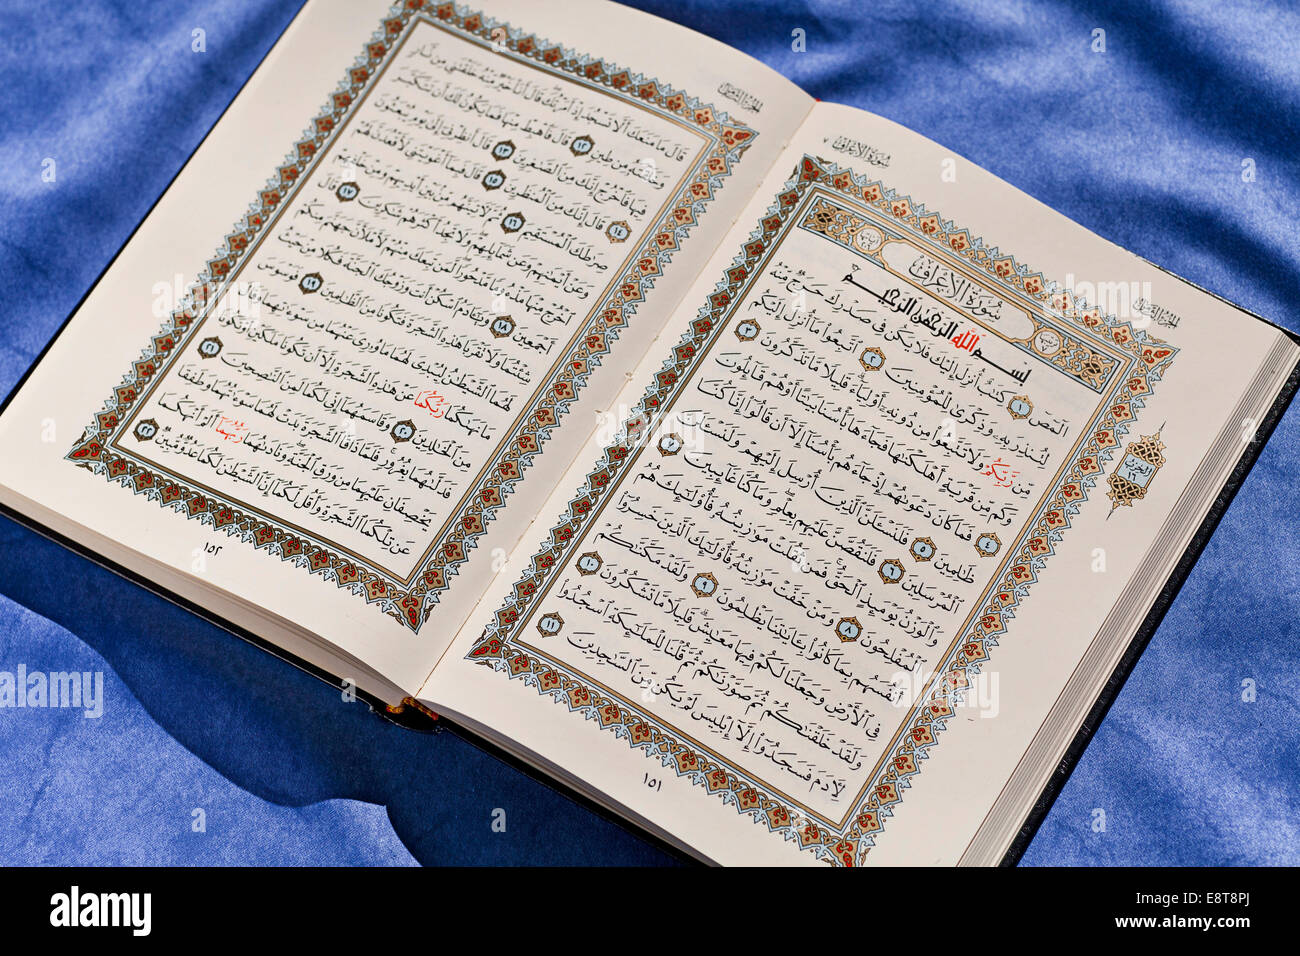 Opened Koran in Arabic script Stock Photo